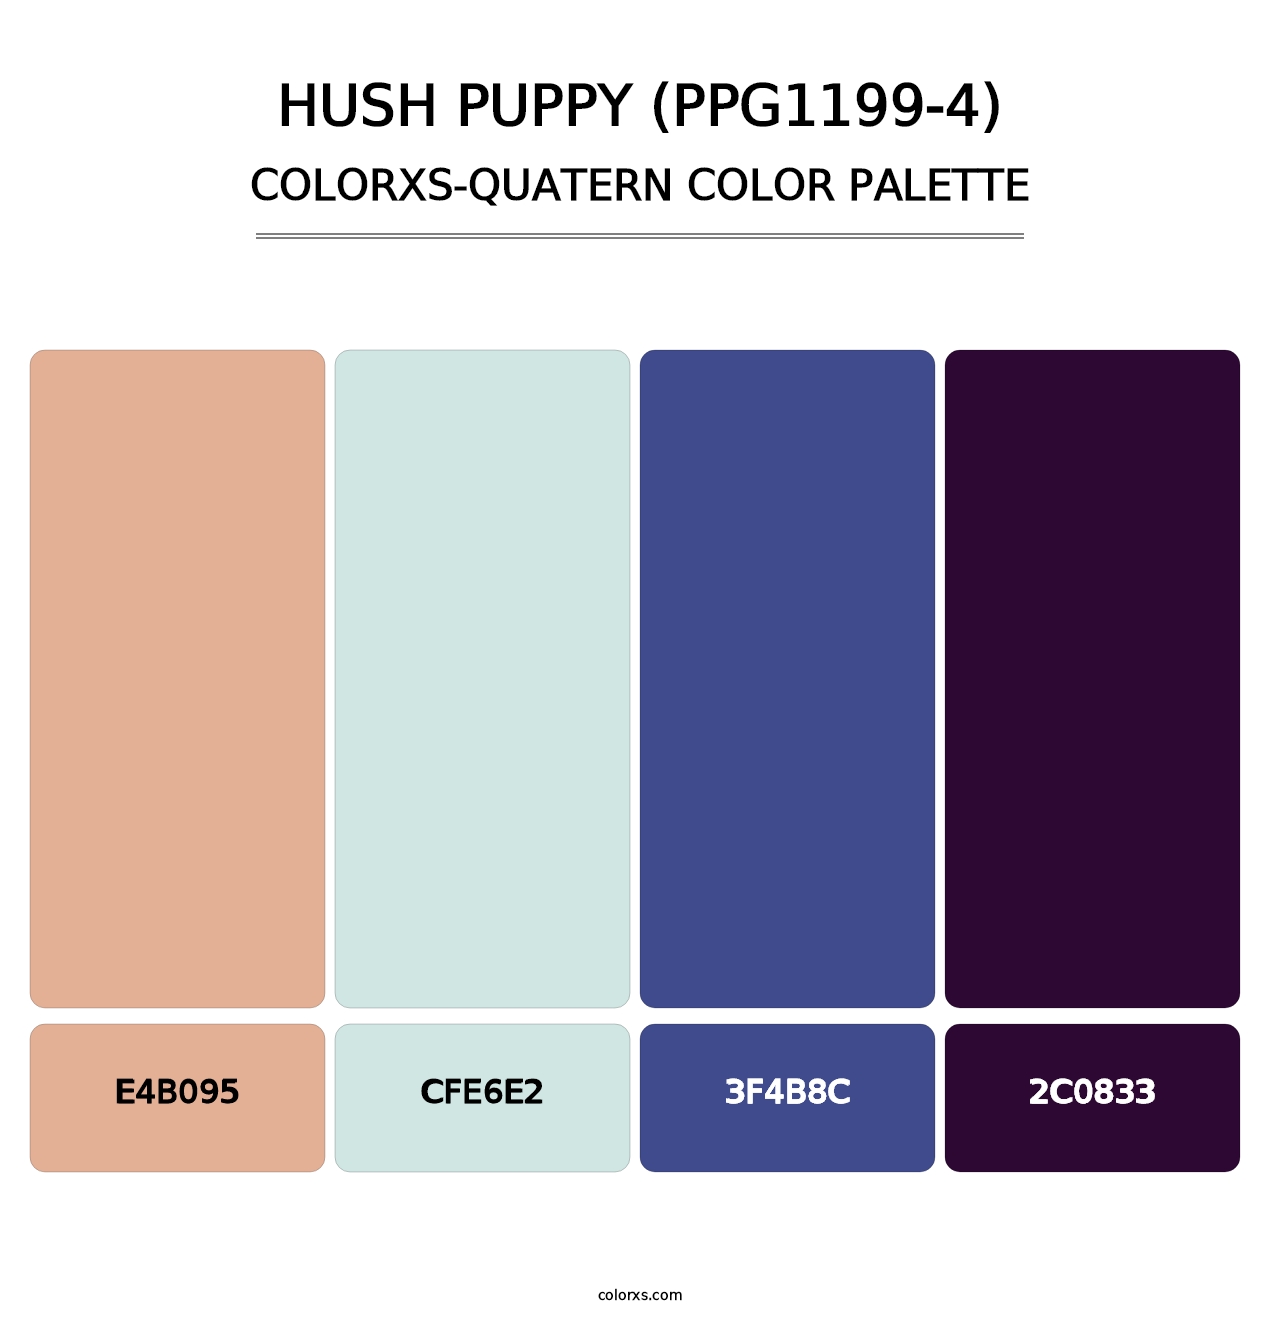 Hush Puppy (PPG1199-4) - Colorxs Quatern Palette